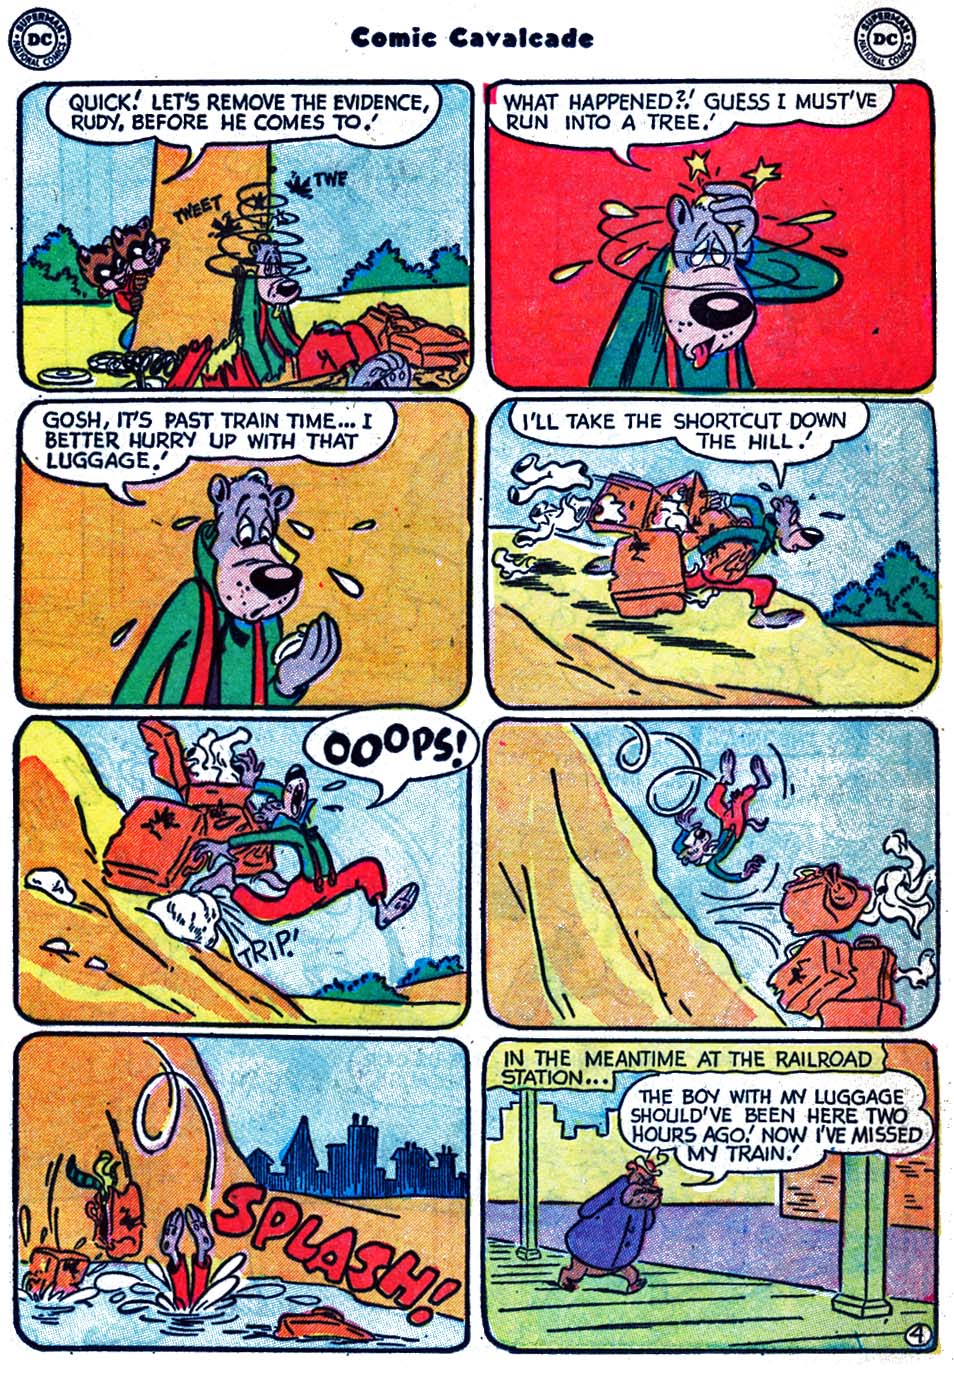 Comic Cavalcade issue 53 - Page 23